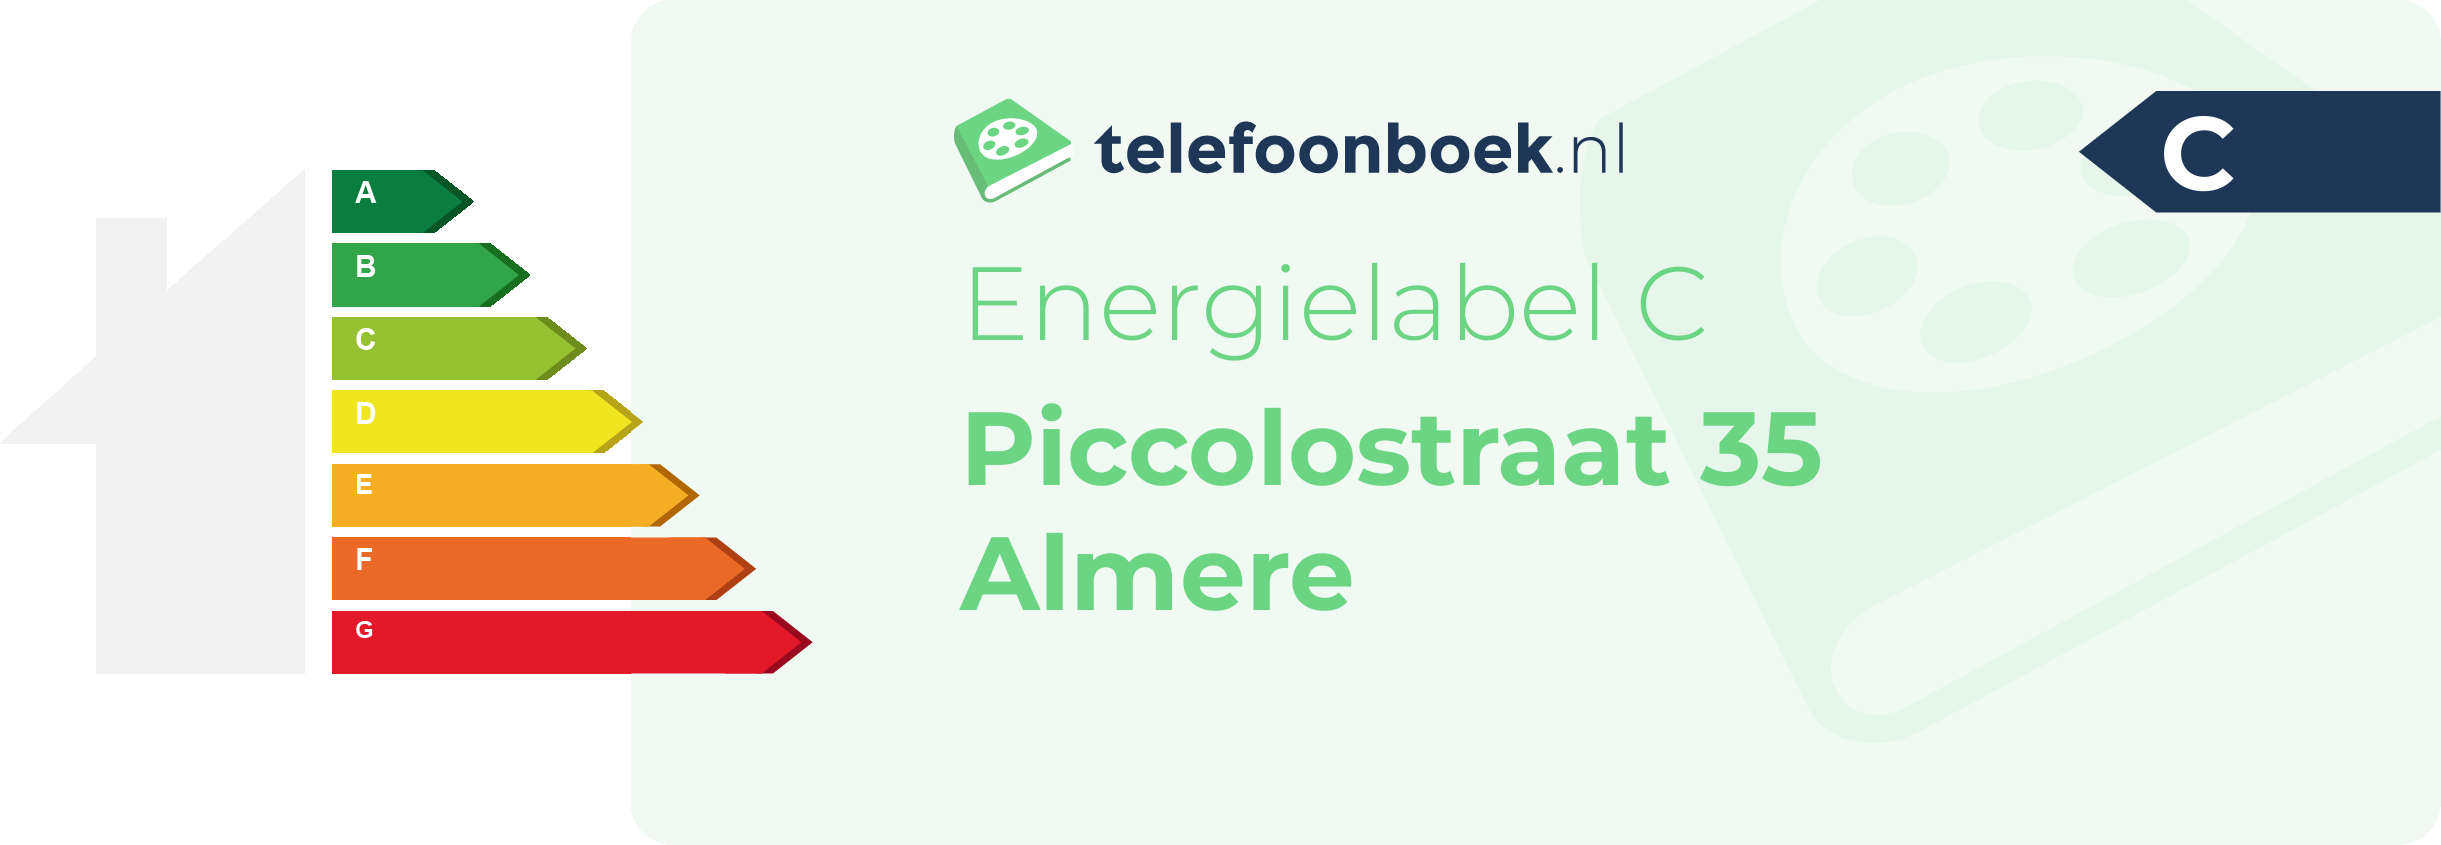 Energielabel Piccolostraat 35 Almere